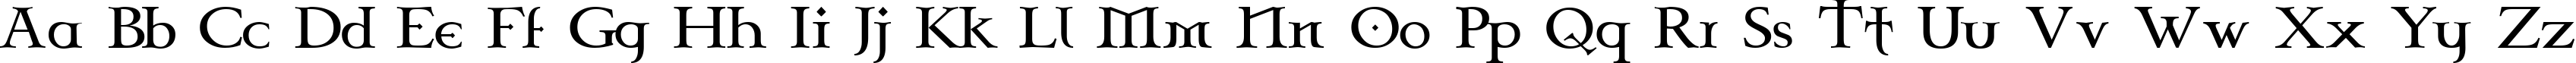 Пример написания английского алфавита шрифтом Celtic Garamond the 2nd